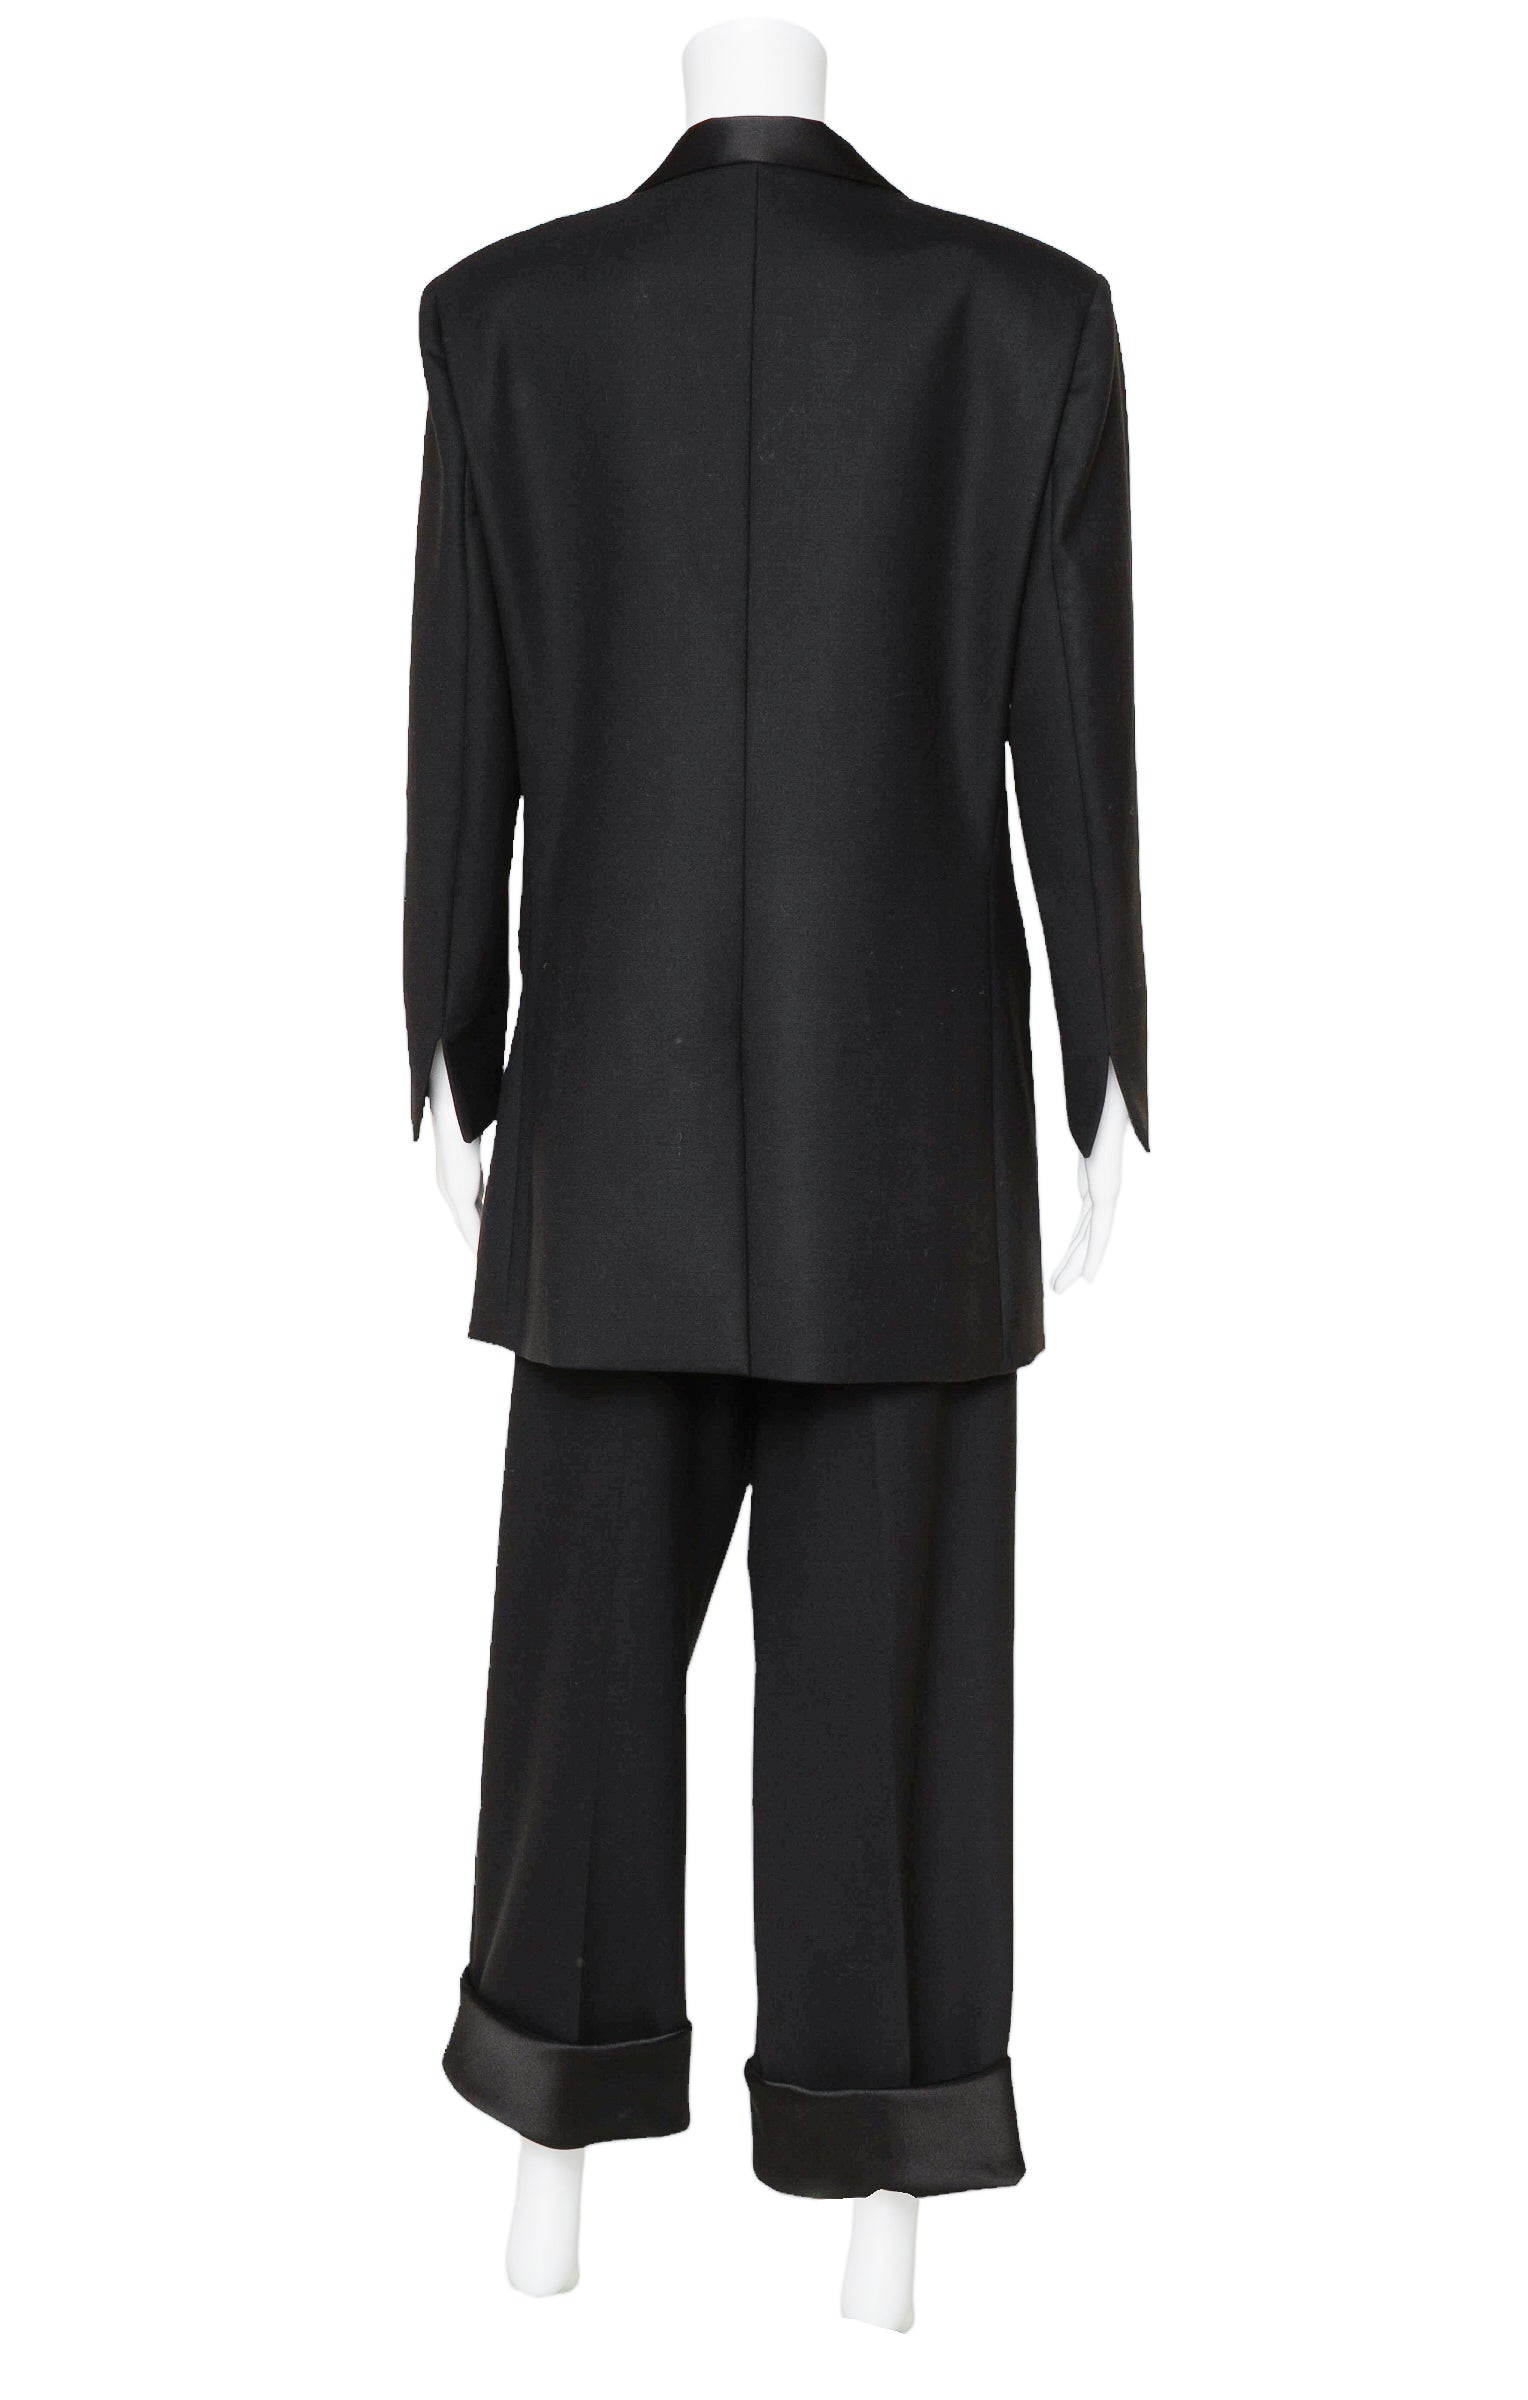 THE ROW (RARE) 3-Piece Suit Size: Jacket - US 14 Pants - US 8 Scarf - 66" x 36.5"